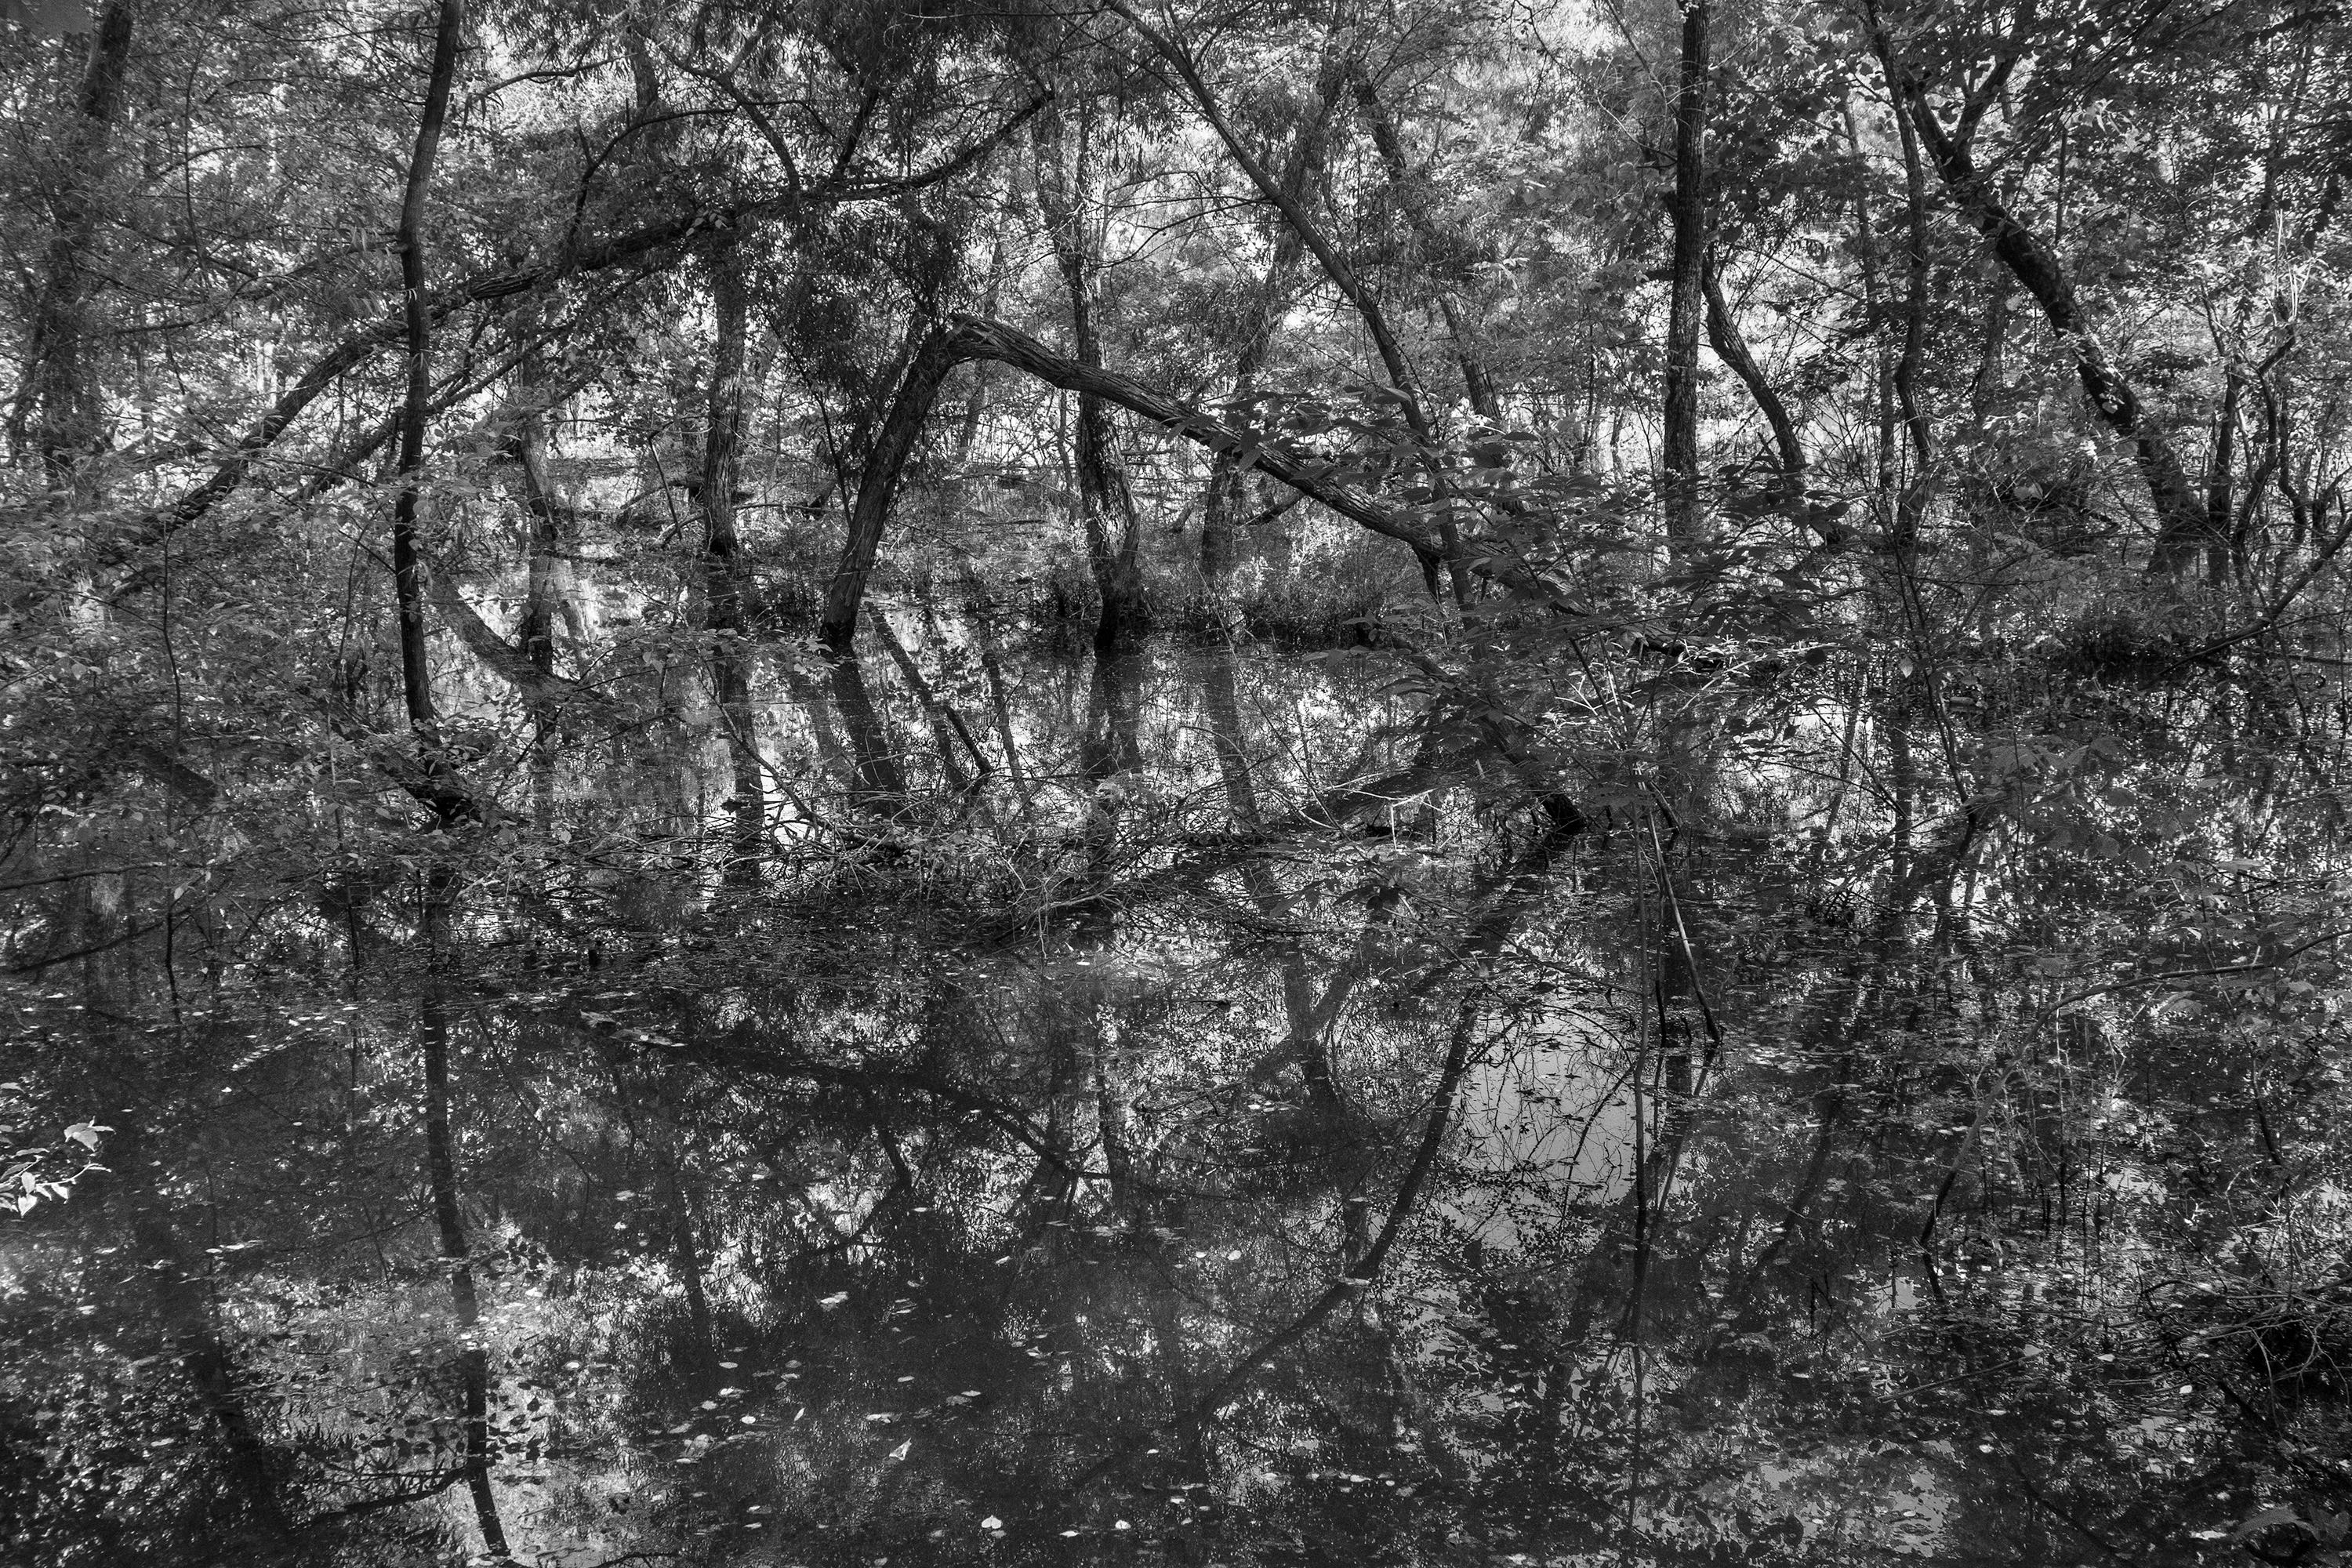 Richard Skoonberg Black and White Photograph - 'The Flooded Forest' - Black and White - Landscape Photography - Eliot Porter